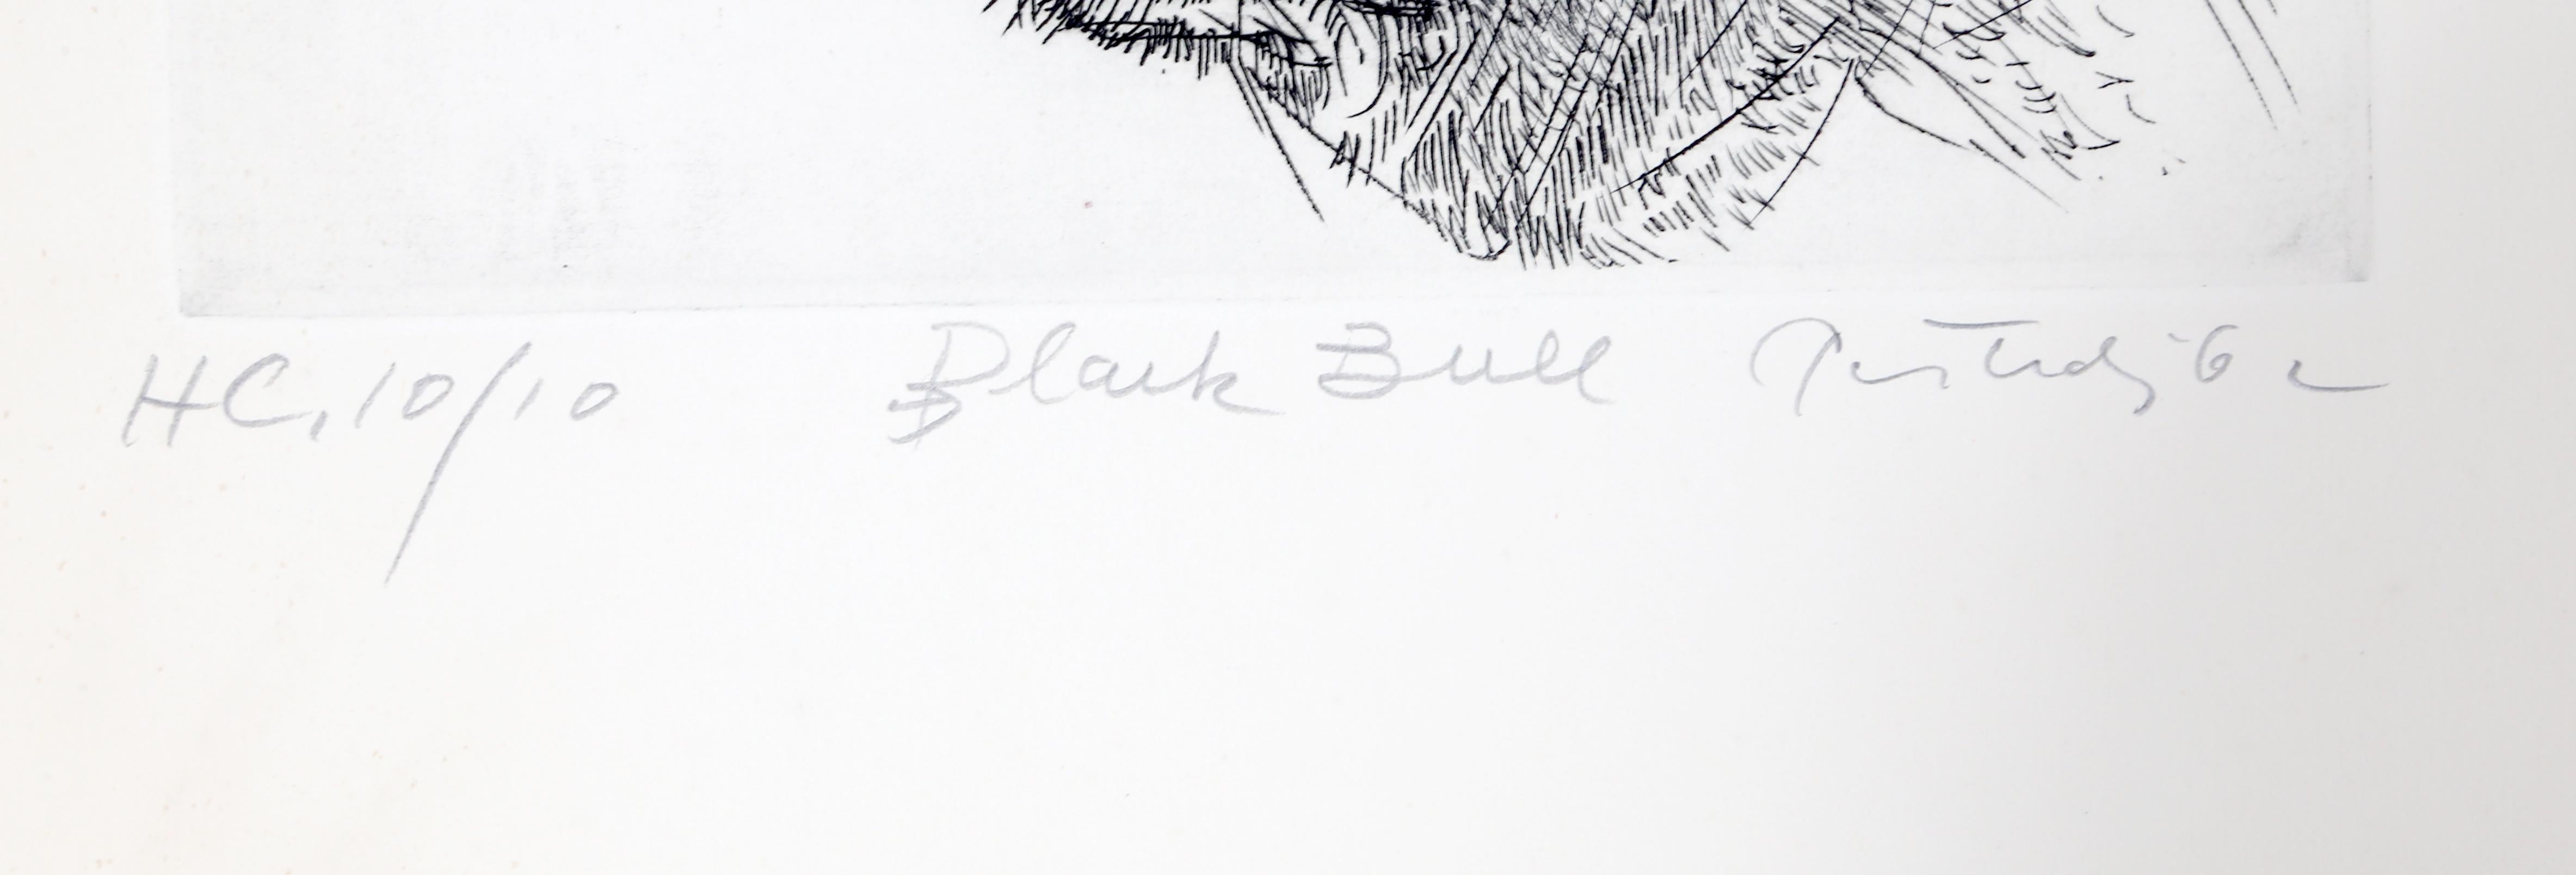 Black Bull - Print by Gabor F. Peterdi